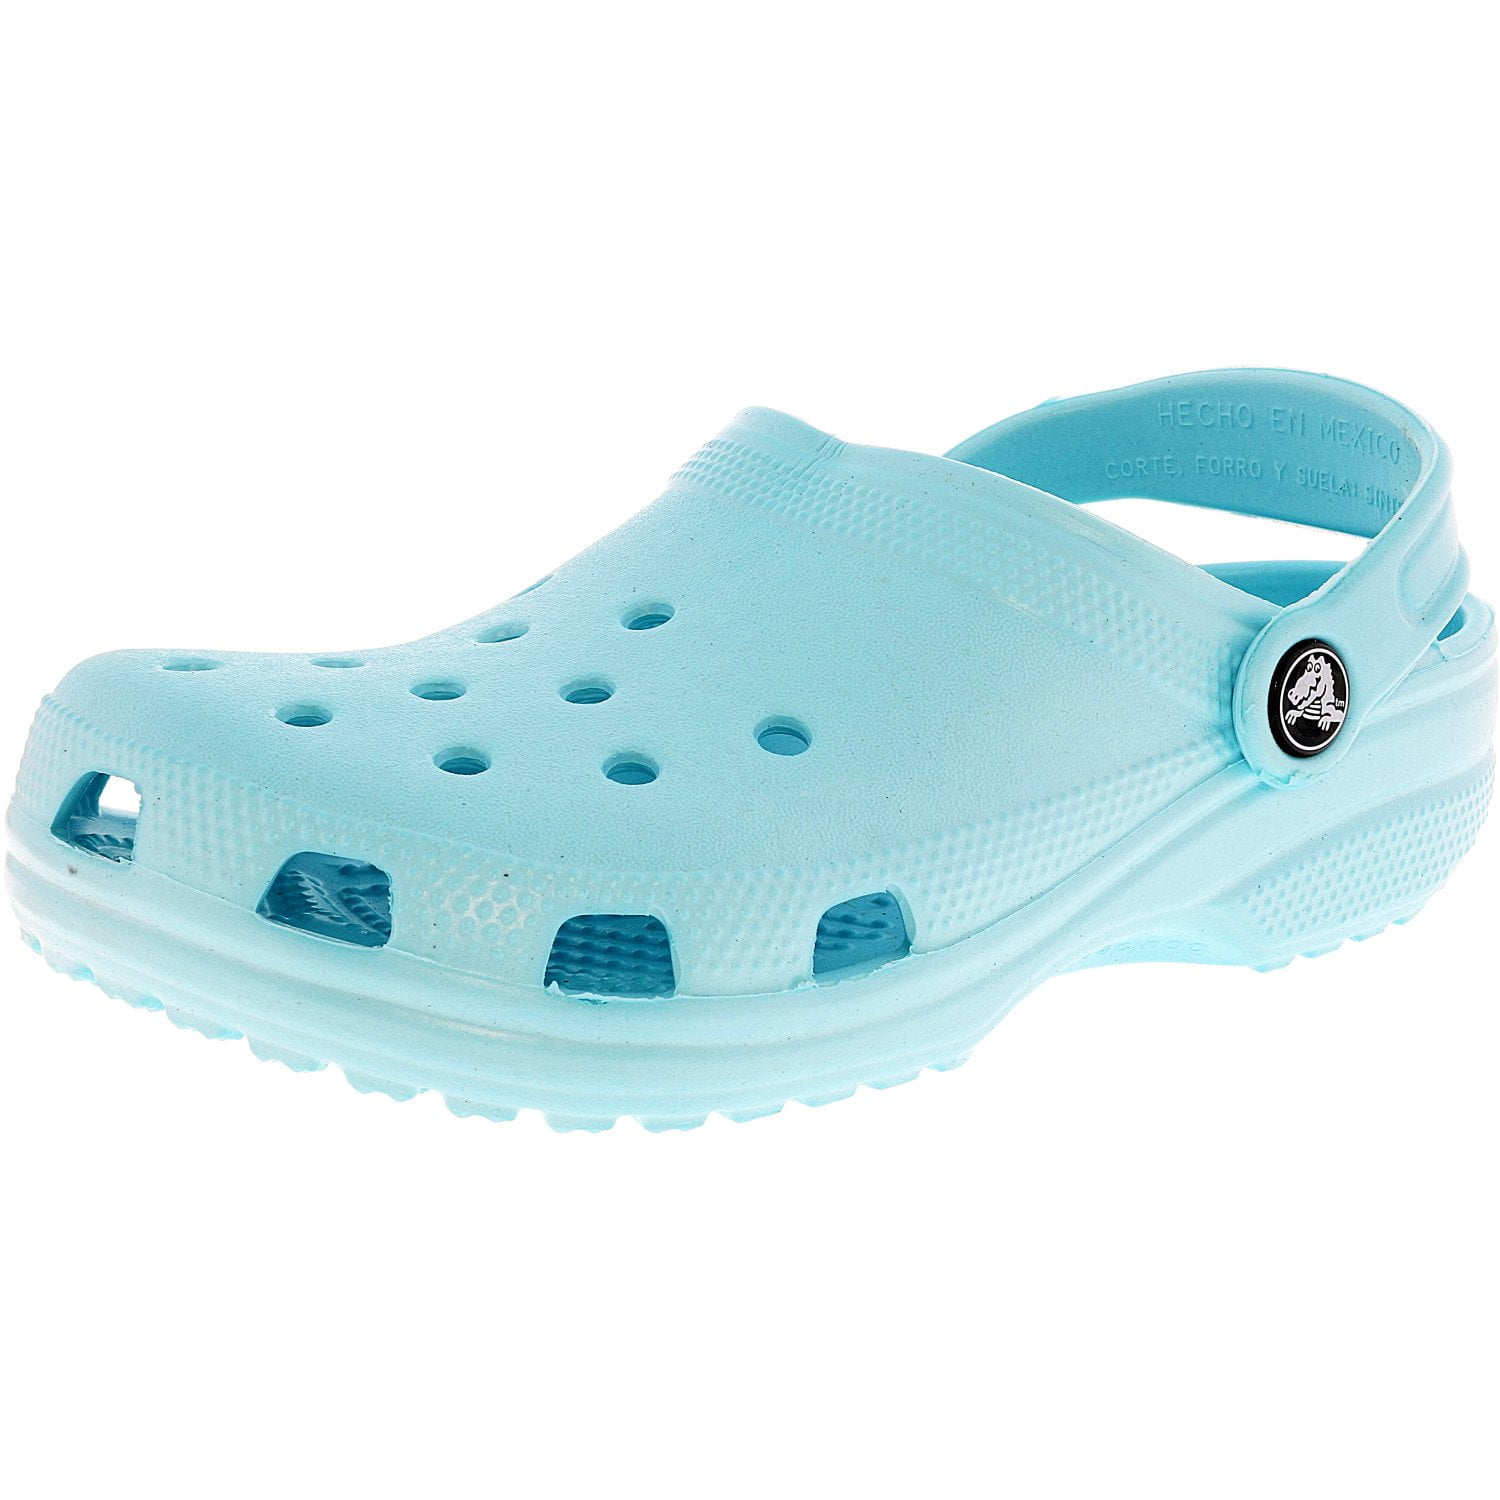 Aqua Blue Krocs Water Clogs Sandals Beach Shoes fit American Girl Size Doll 